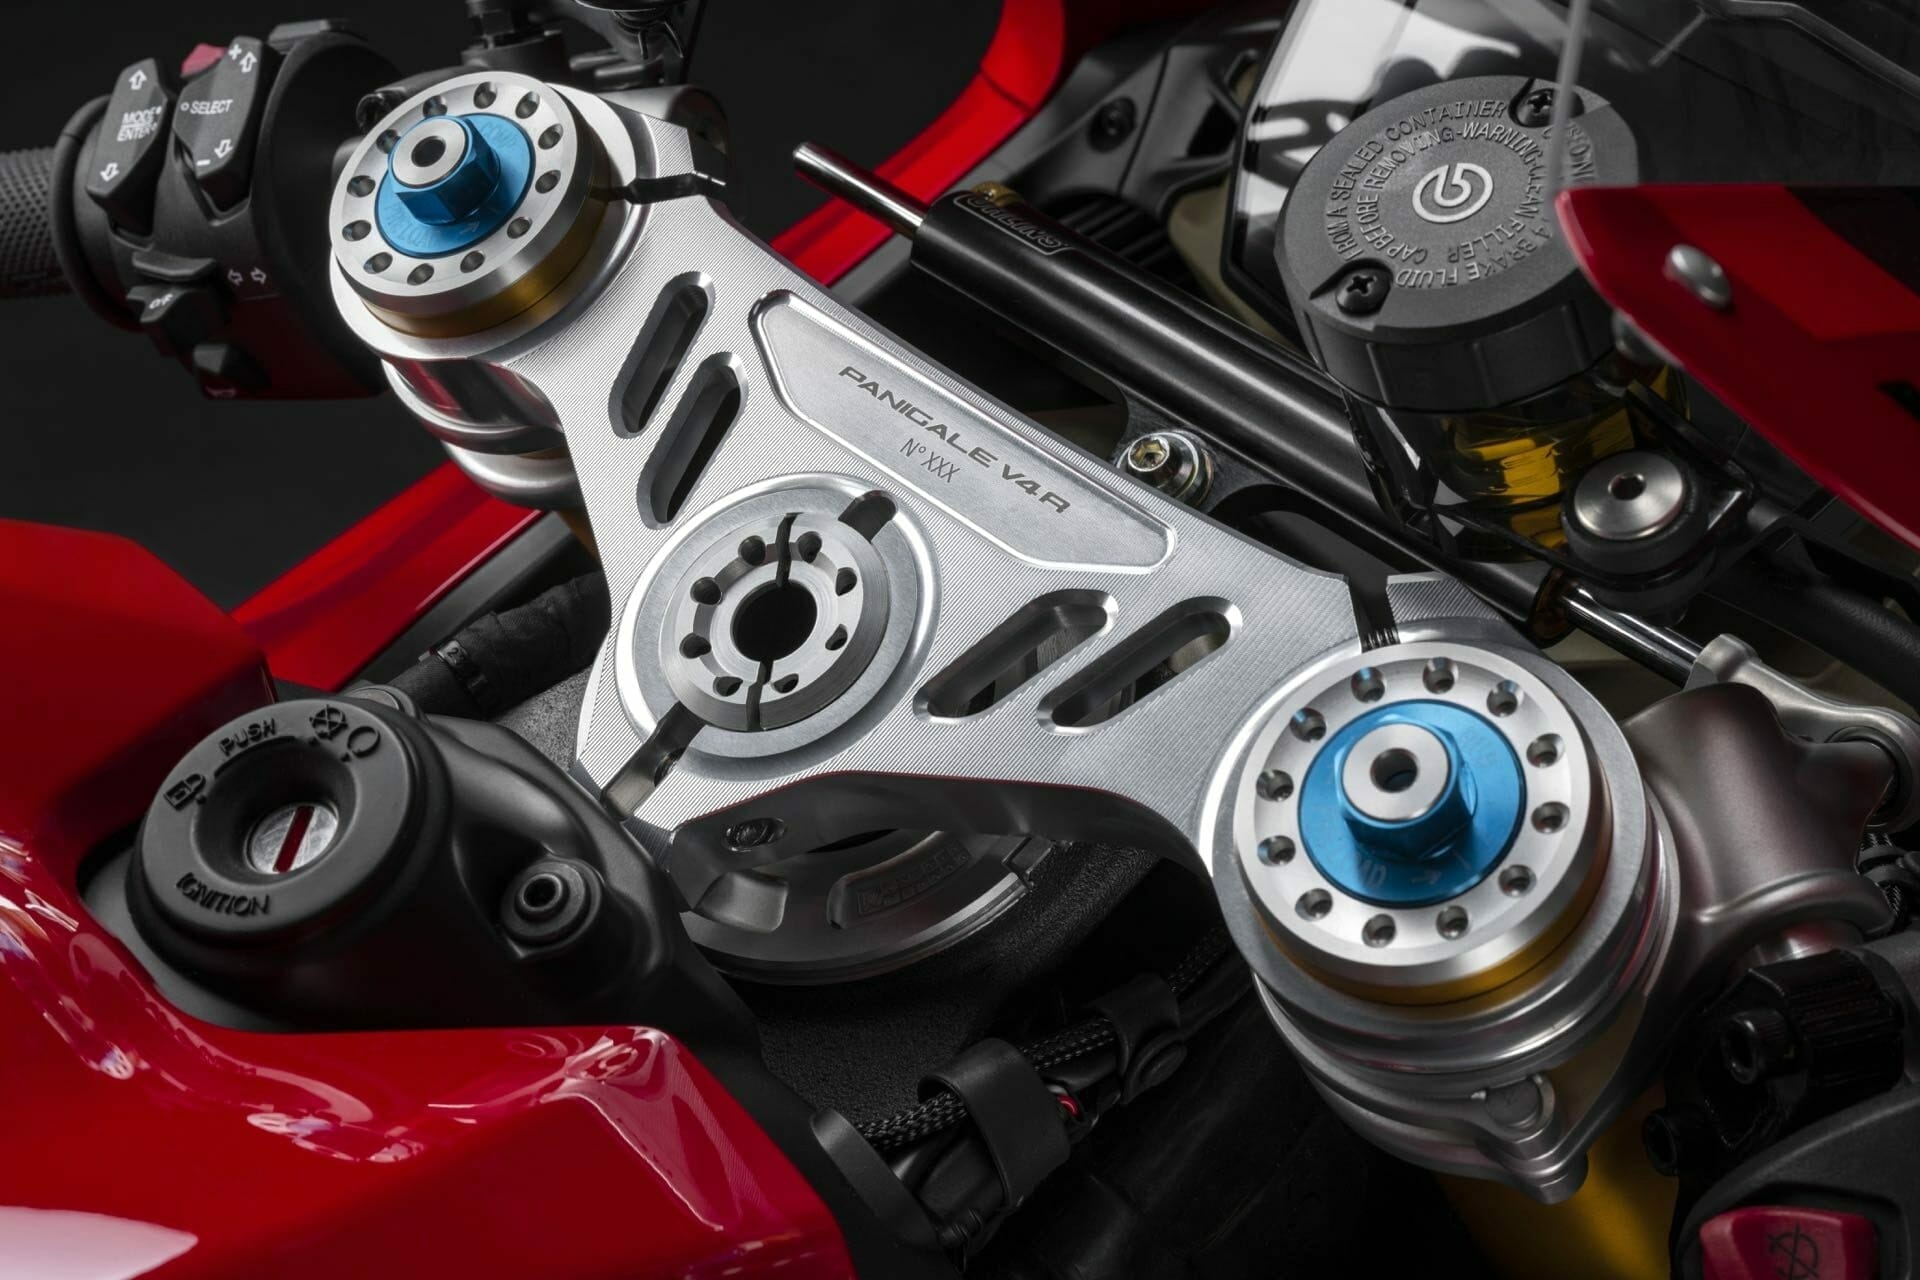 Ducati presents the new Panigale V4 R - EICMA